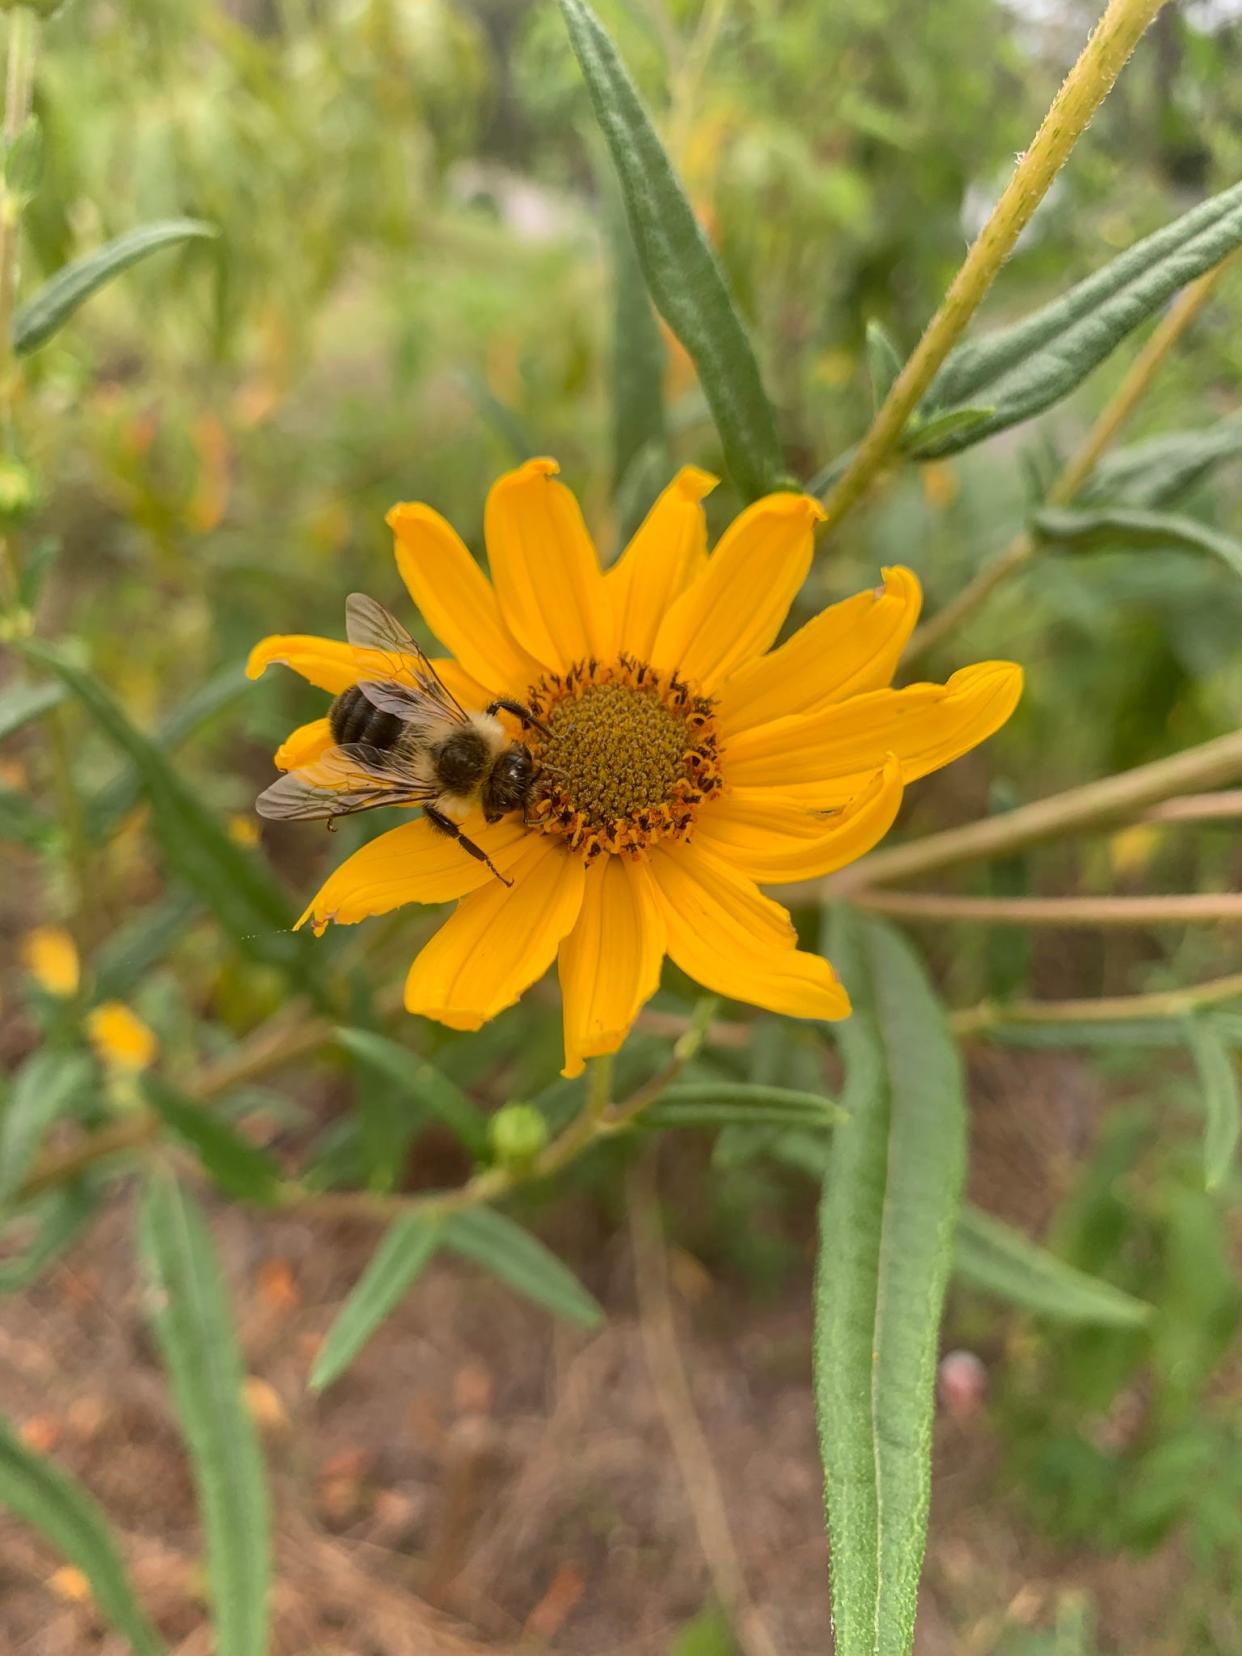 A diversity of native pollinator plants supports a diversity of native pollinators.